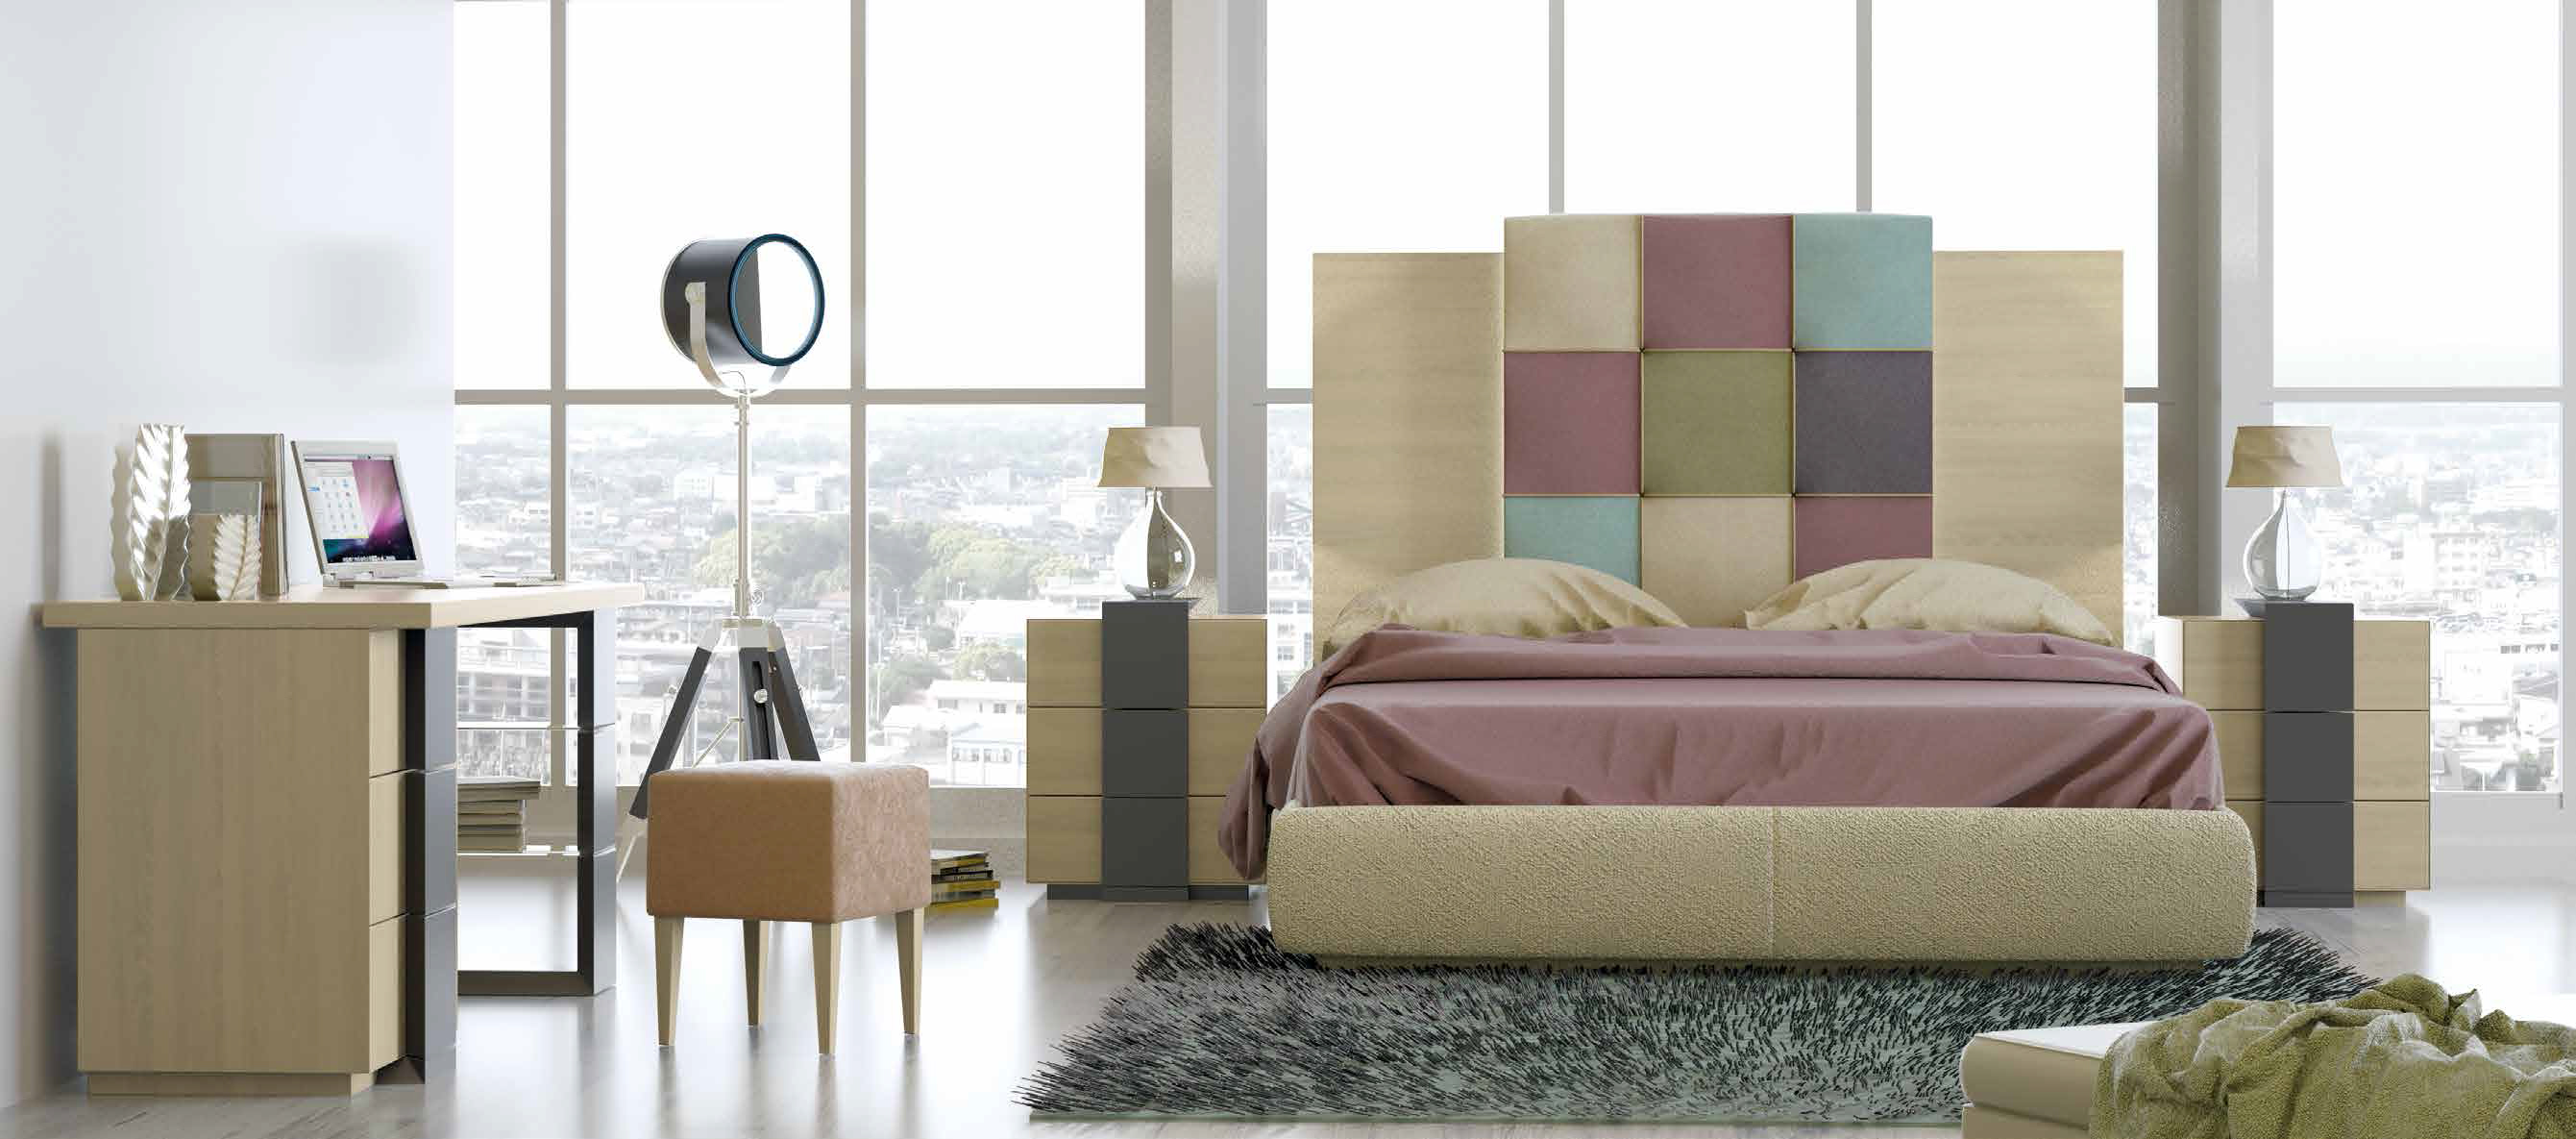 Brands Franco Furniture Bedrooms vol1, Spain DOR 12